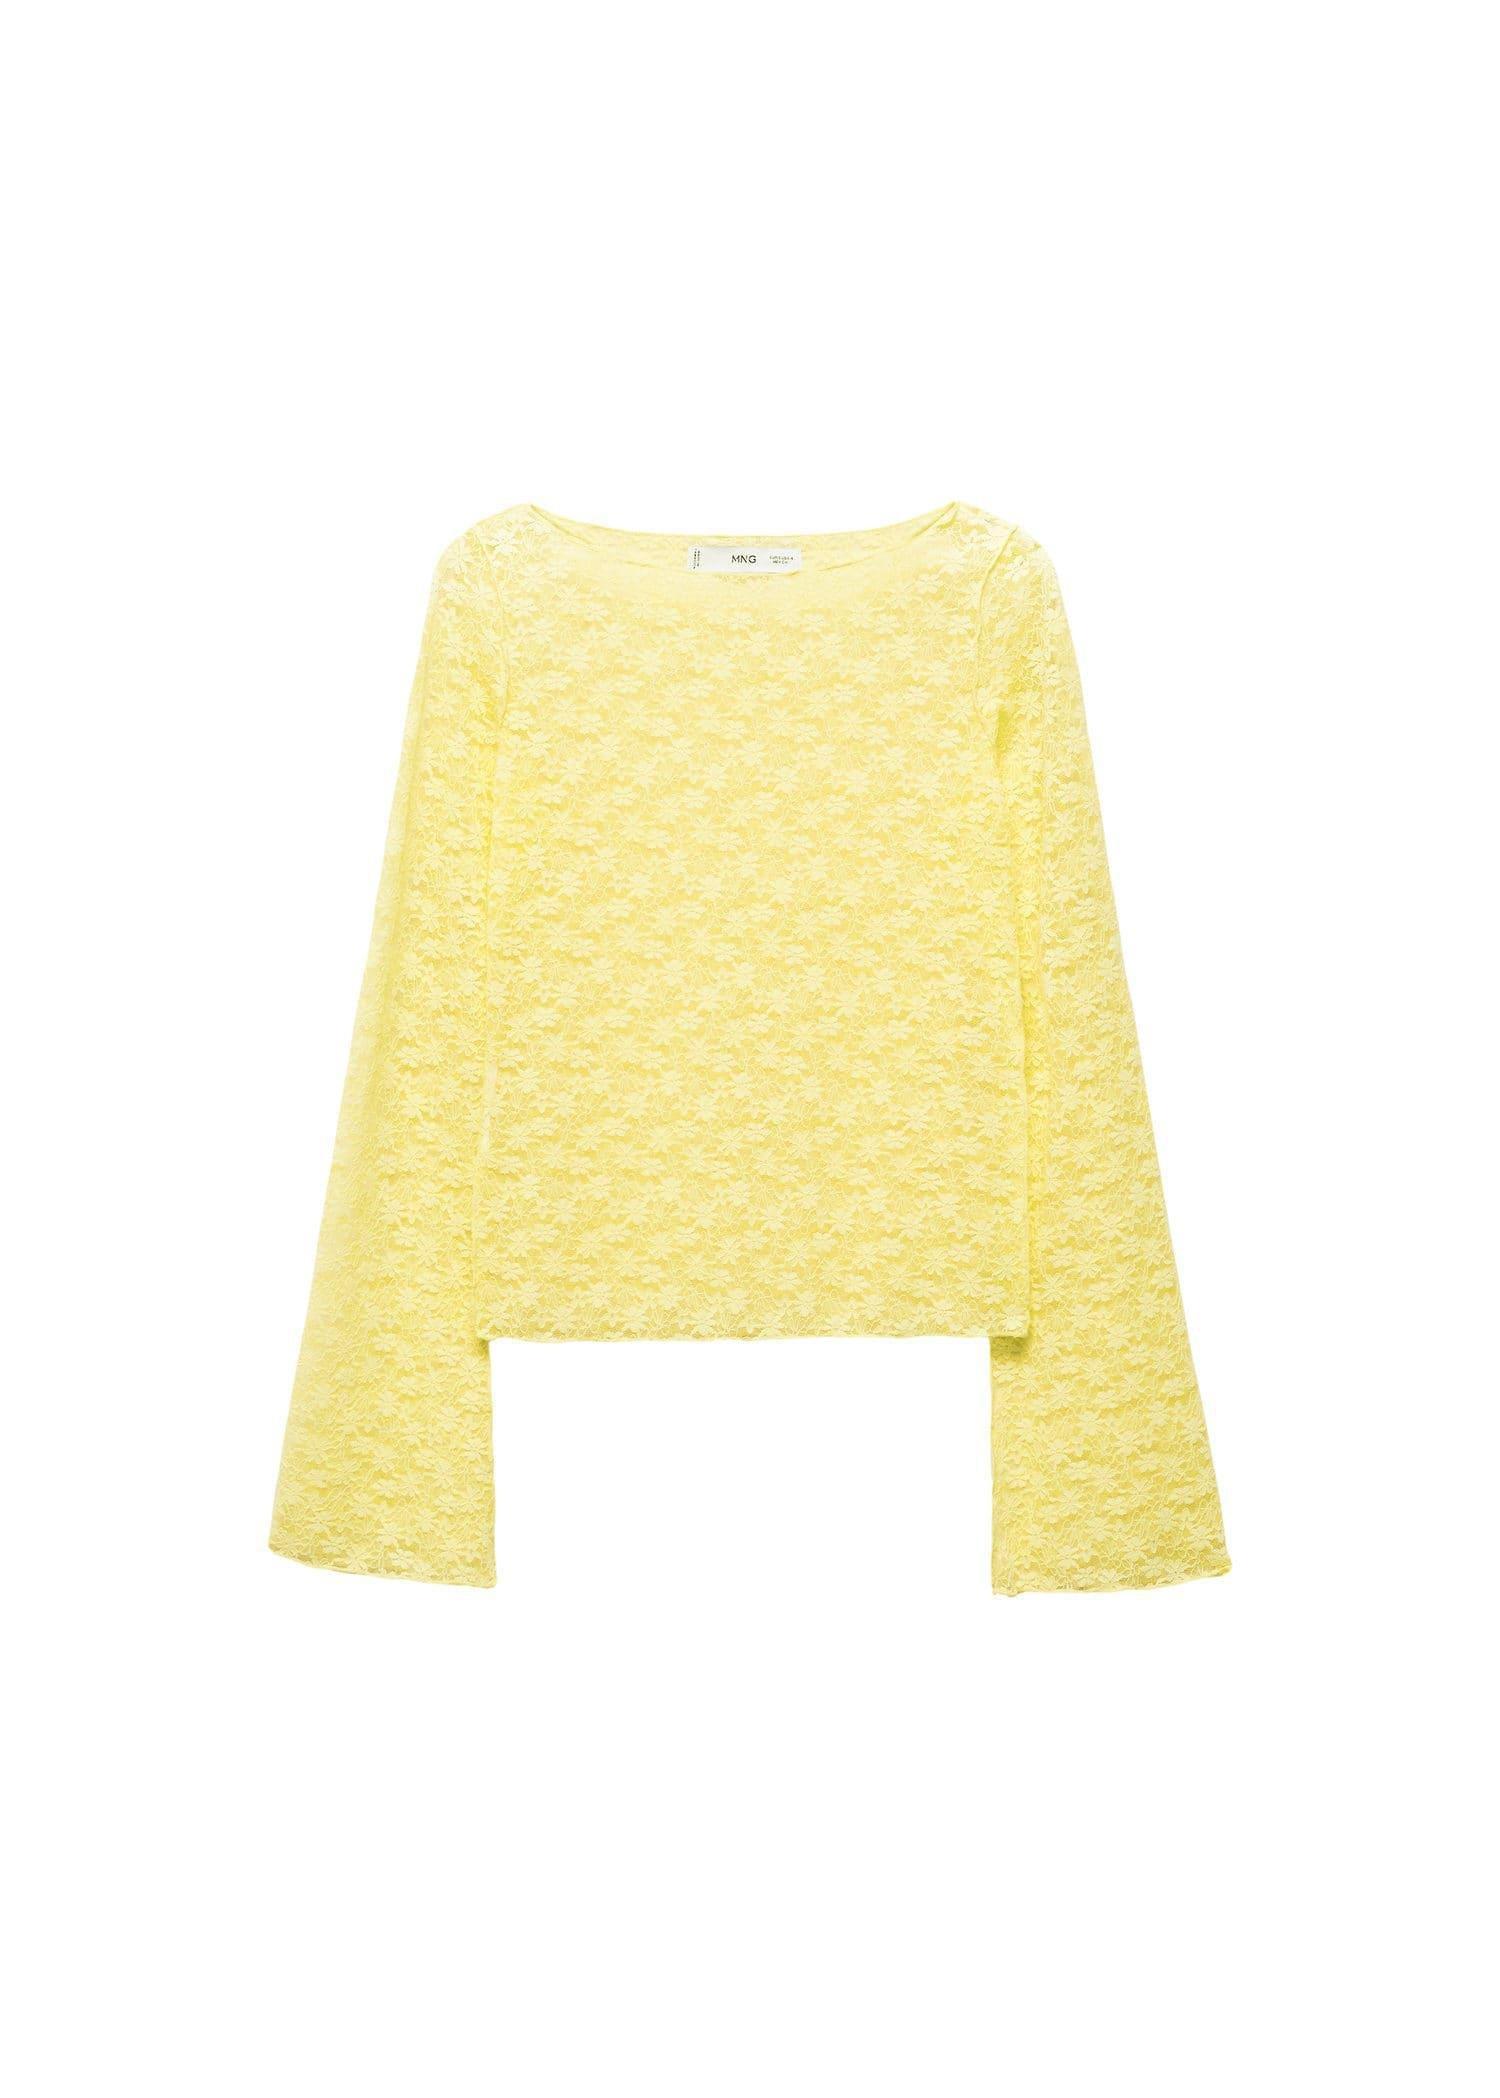 Mango - Yellow Floral Lace T-Shirt